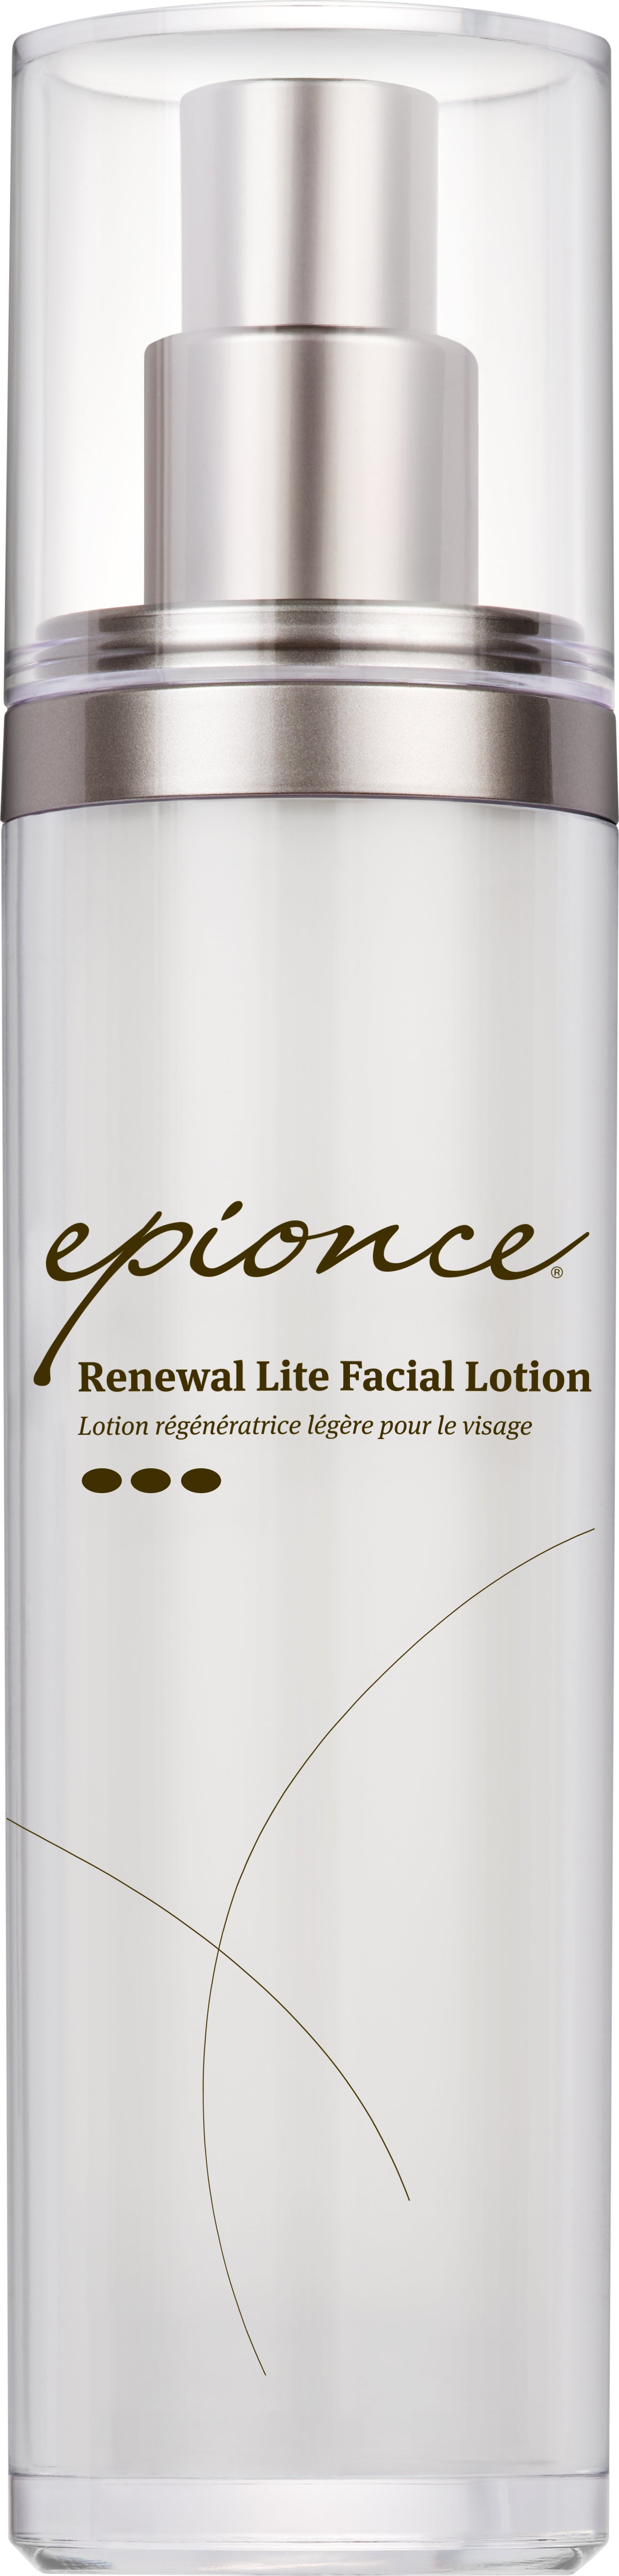 Epionce | Renewal Lite Facial Lotion (50ml)